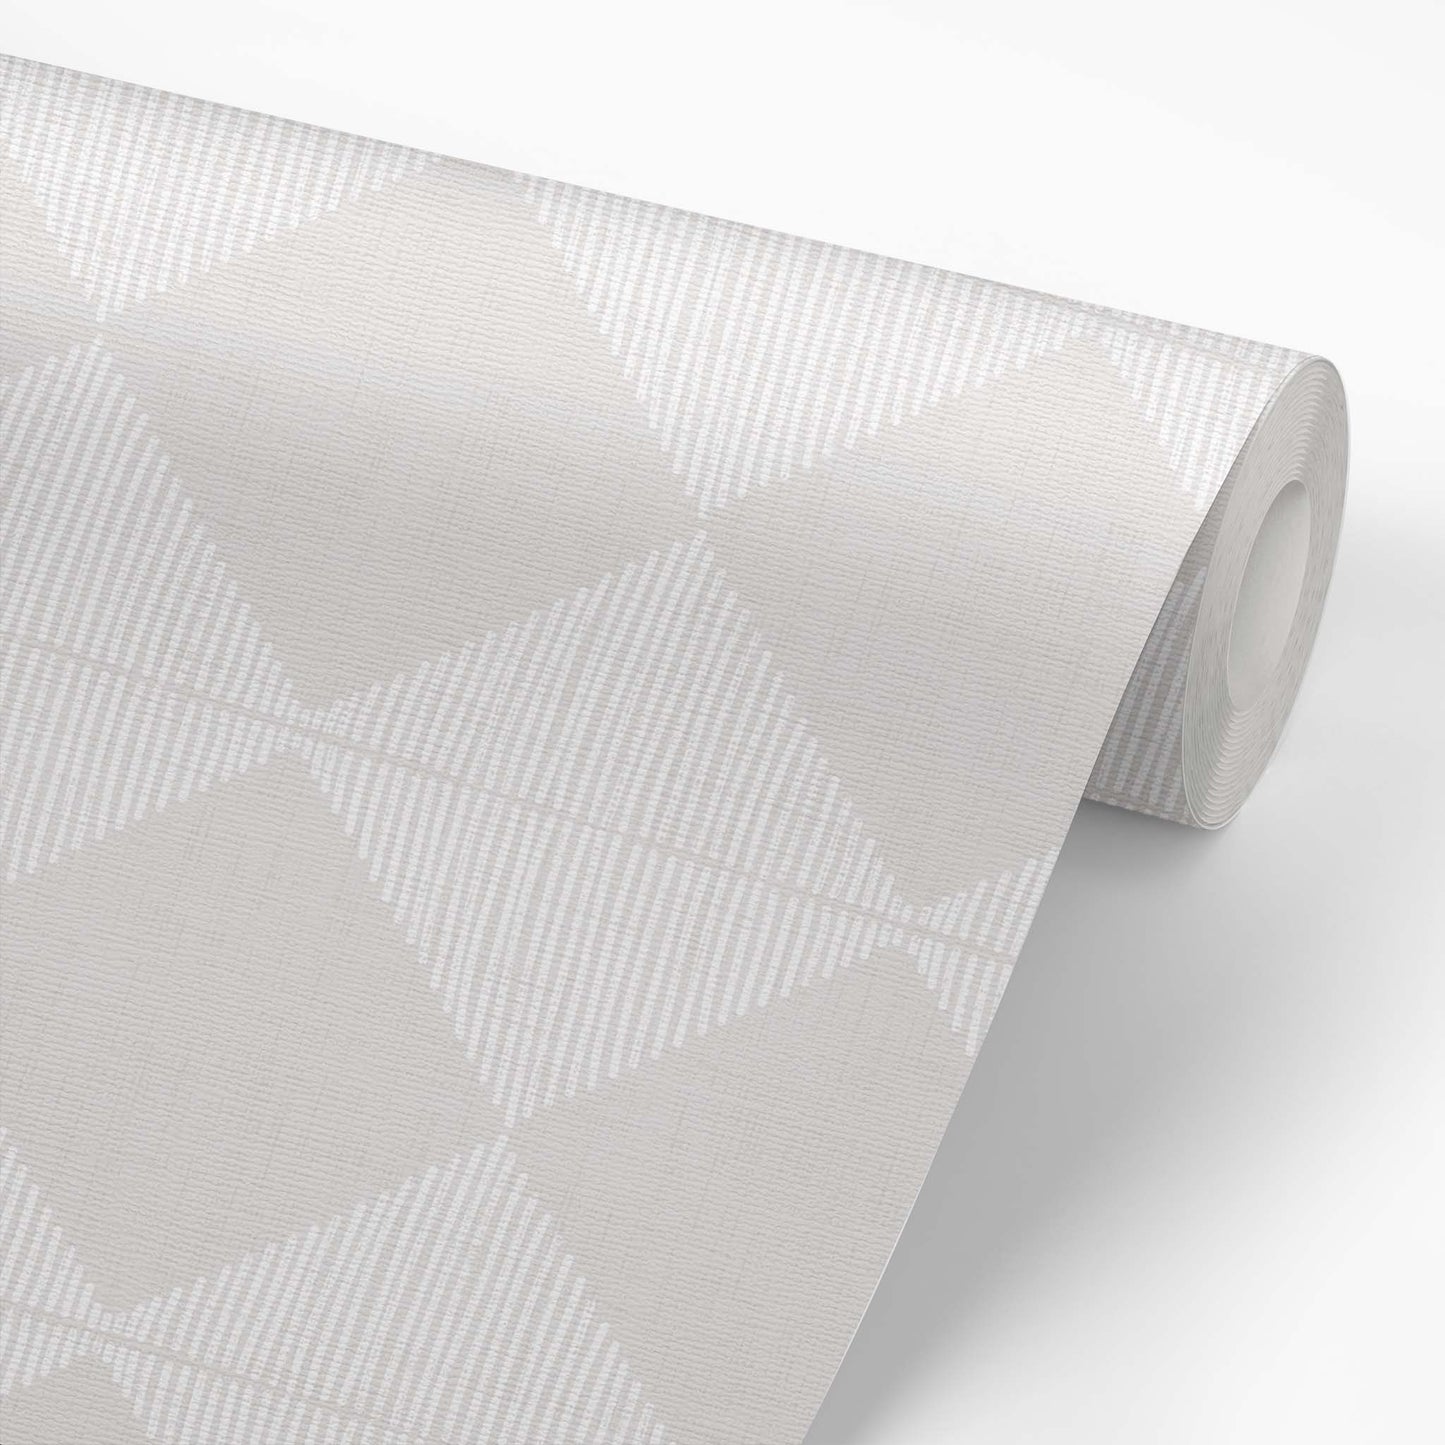 Antwan Checkerboard Wallpaper - Soft Gray